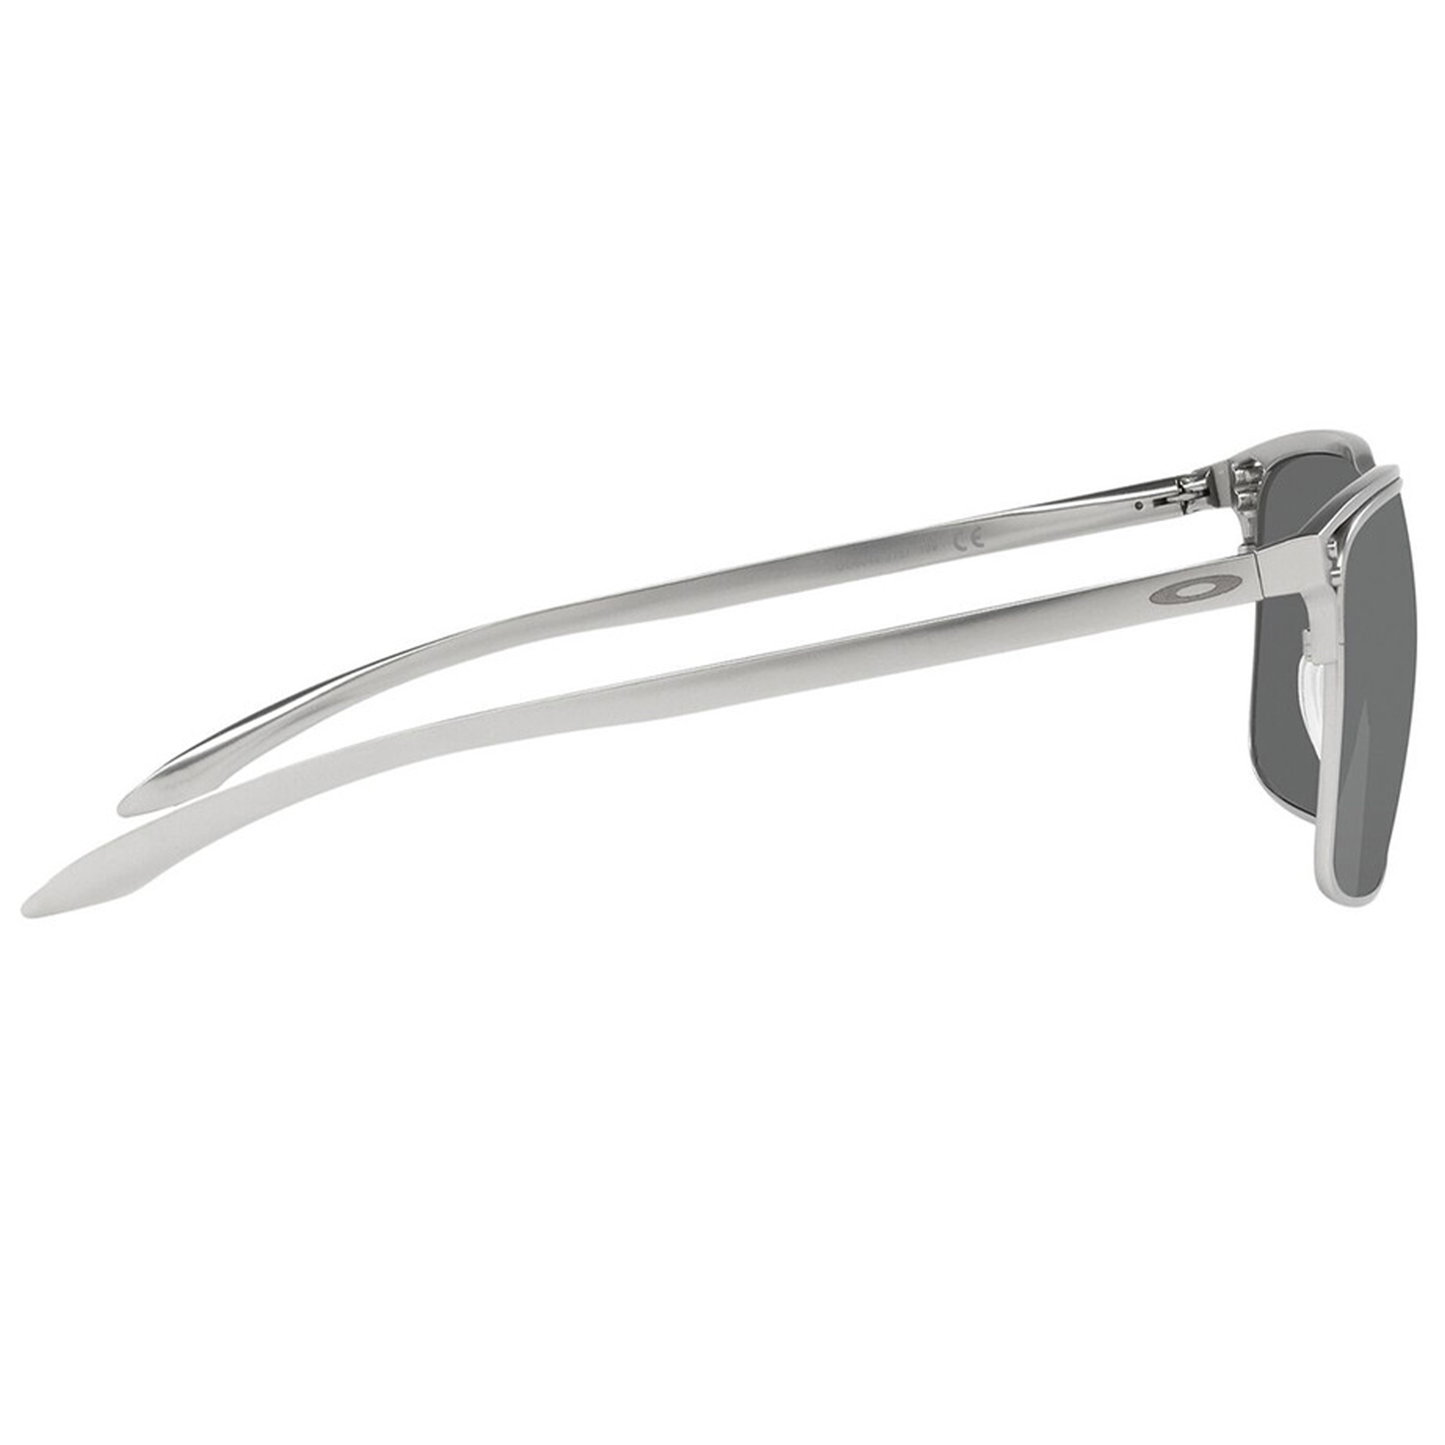 Oakley Holbrook Ti Sunglasses (Satin Chrome) Prizm Black Lens - Free Case